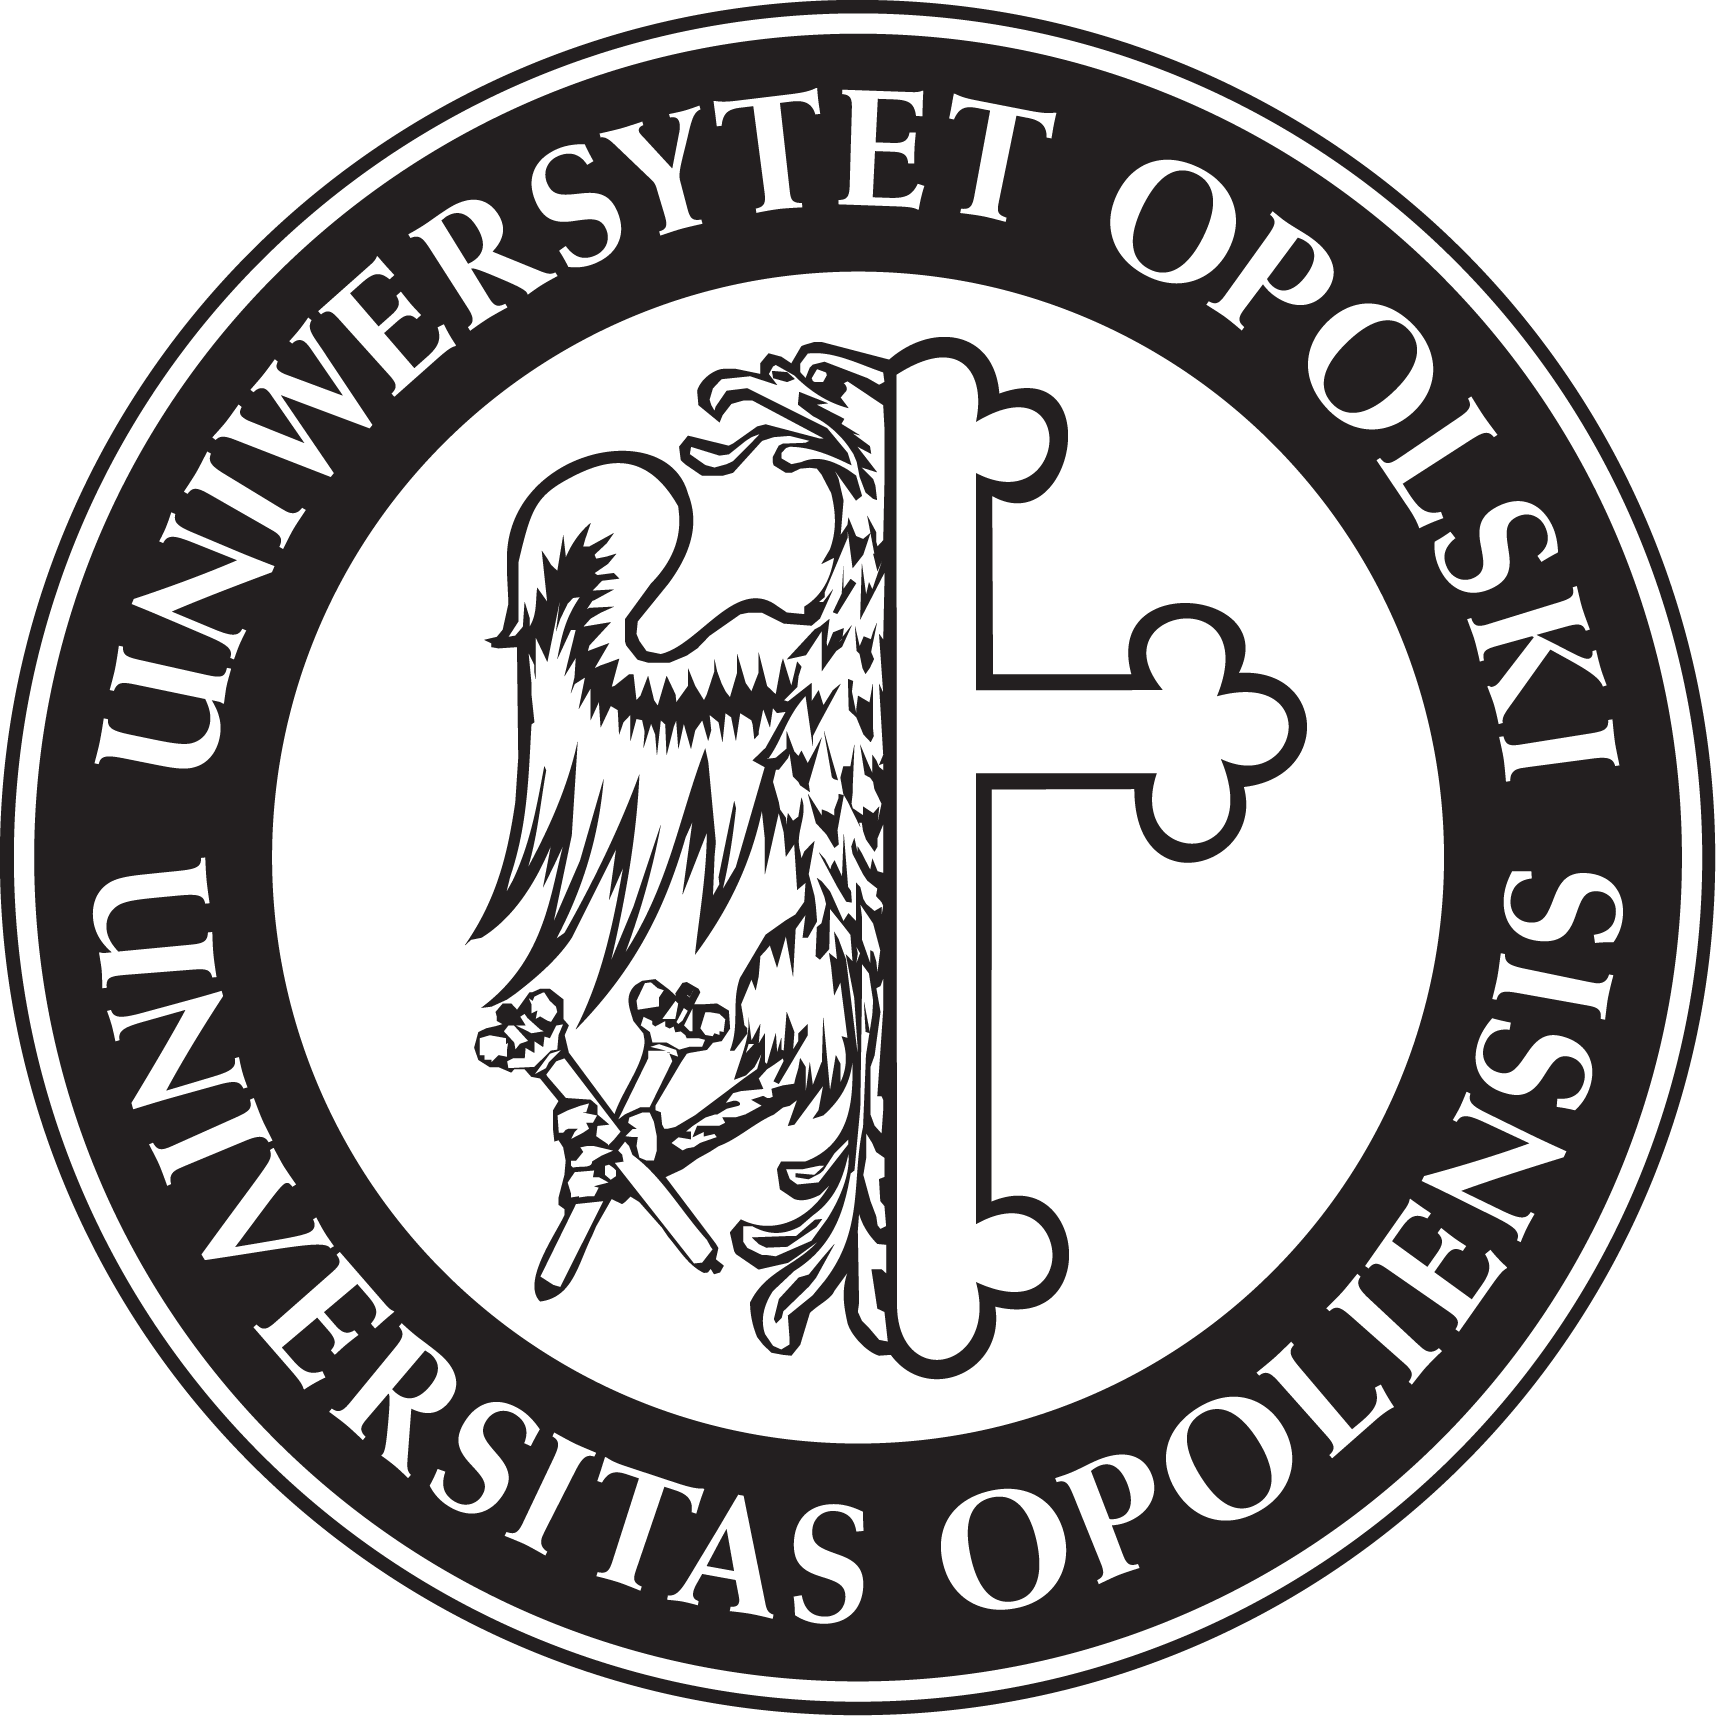 Logo Uniwersytetu Opolskiego